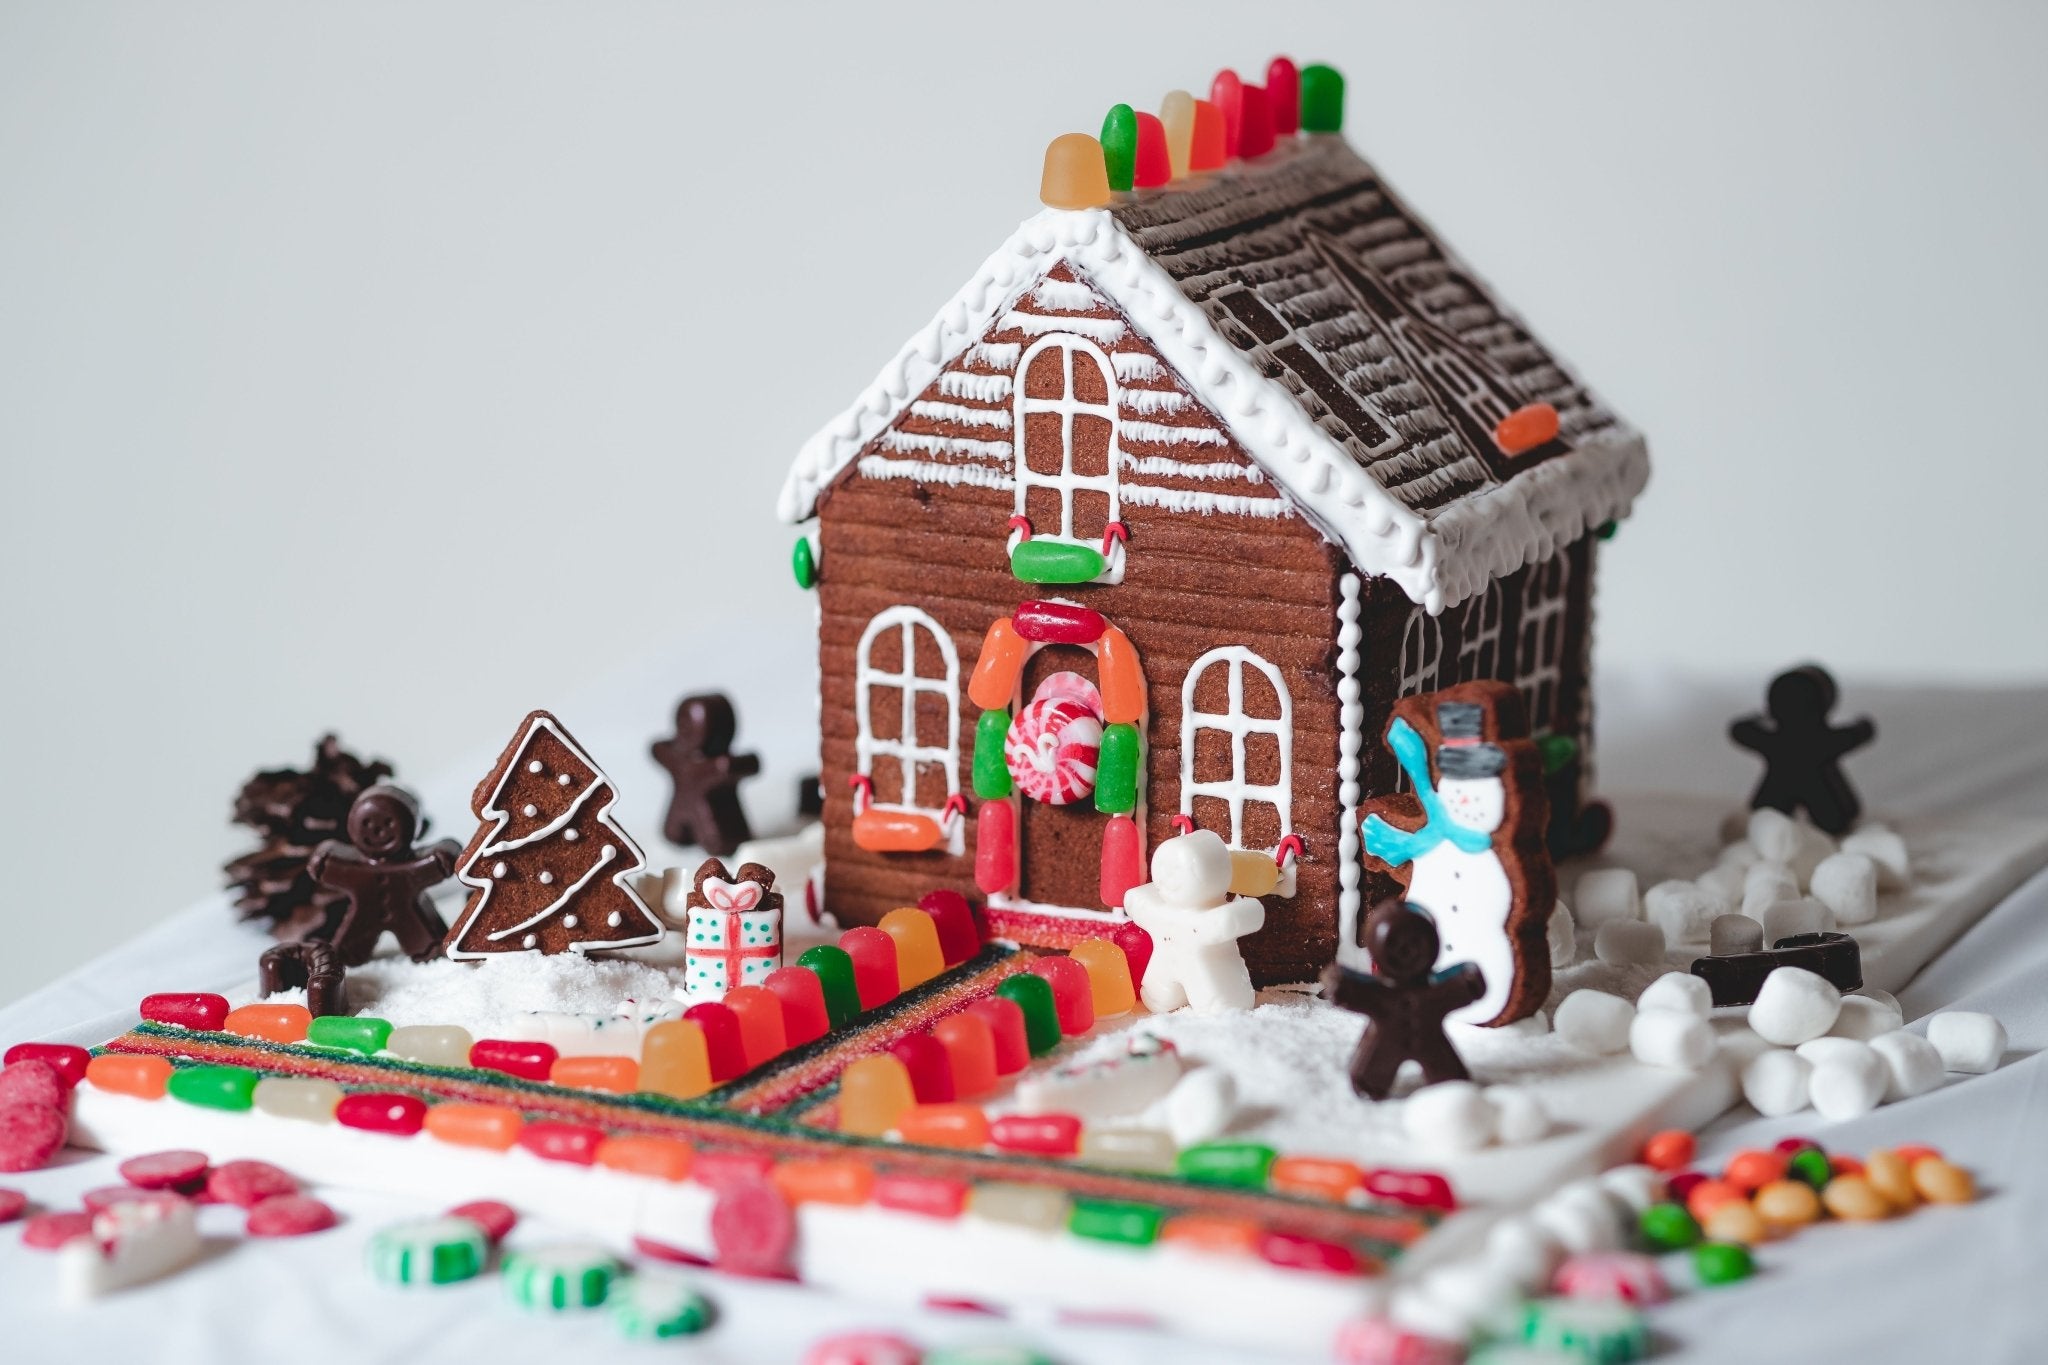 Make Your Own Gingerbread House - Koko-Kamel.com